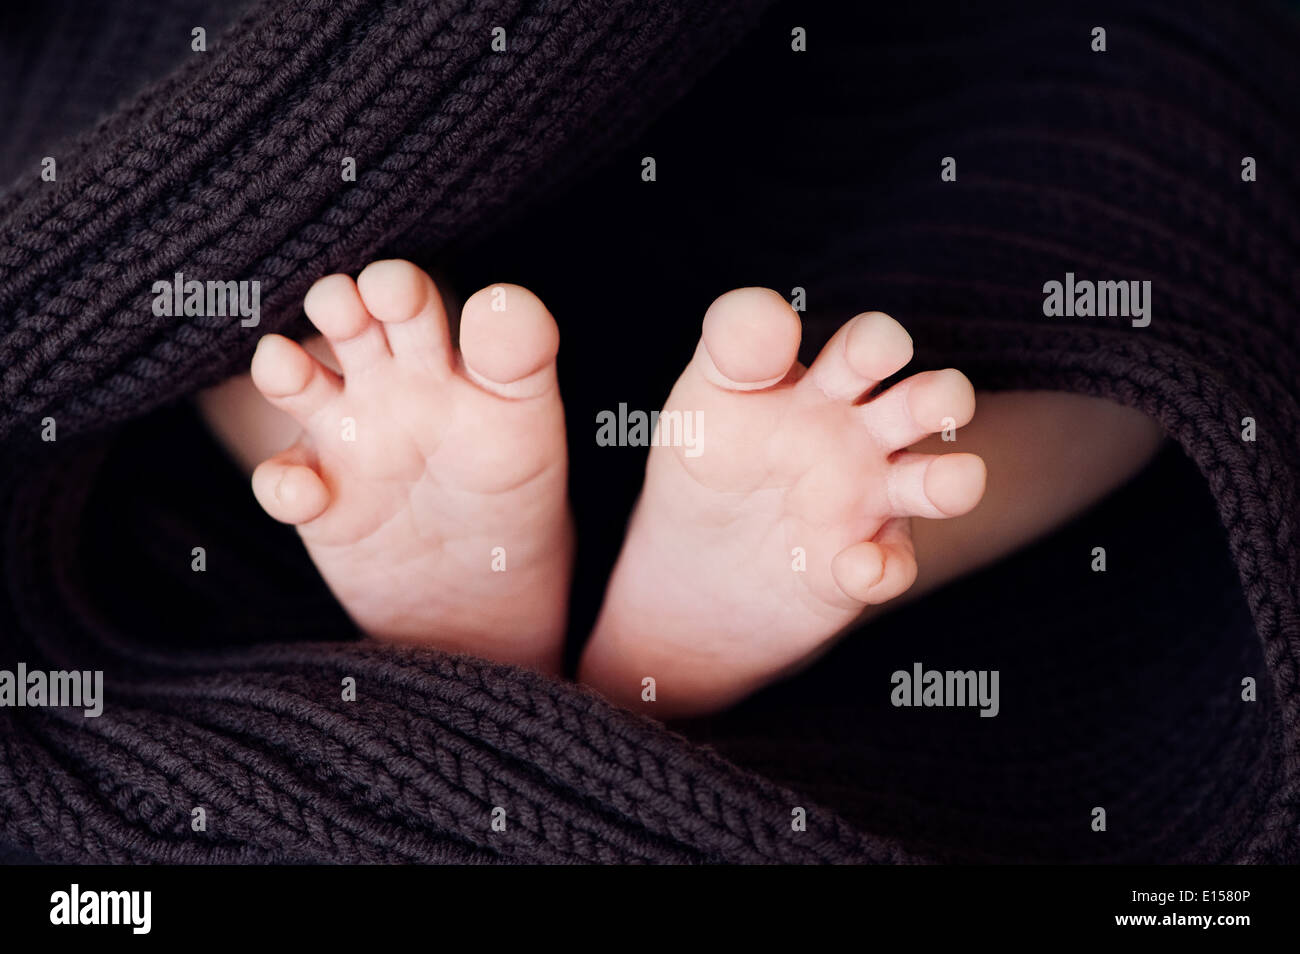 Newborn baby feet on soft brown blanket Stock Photo